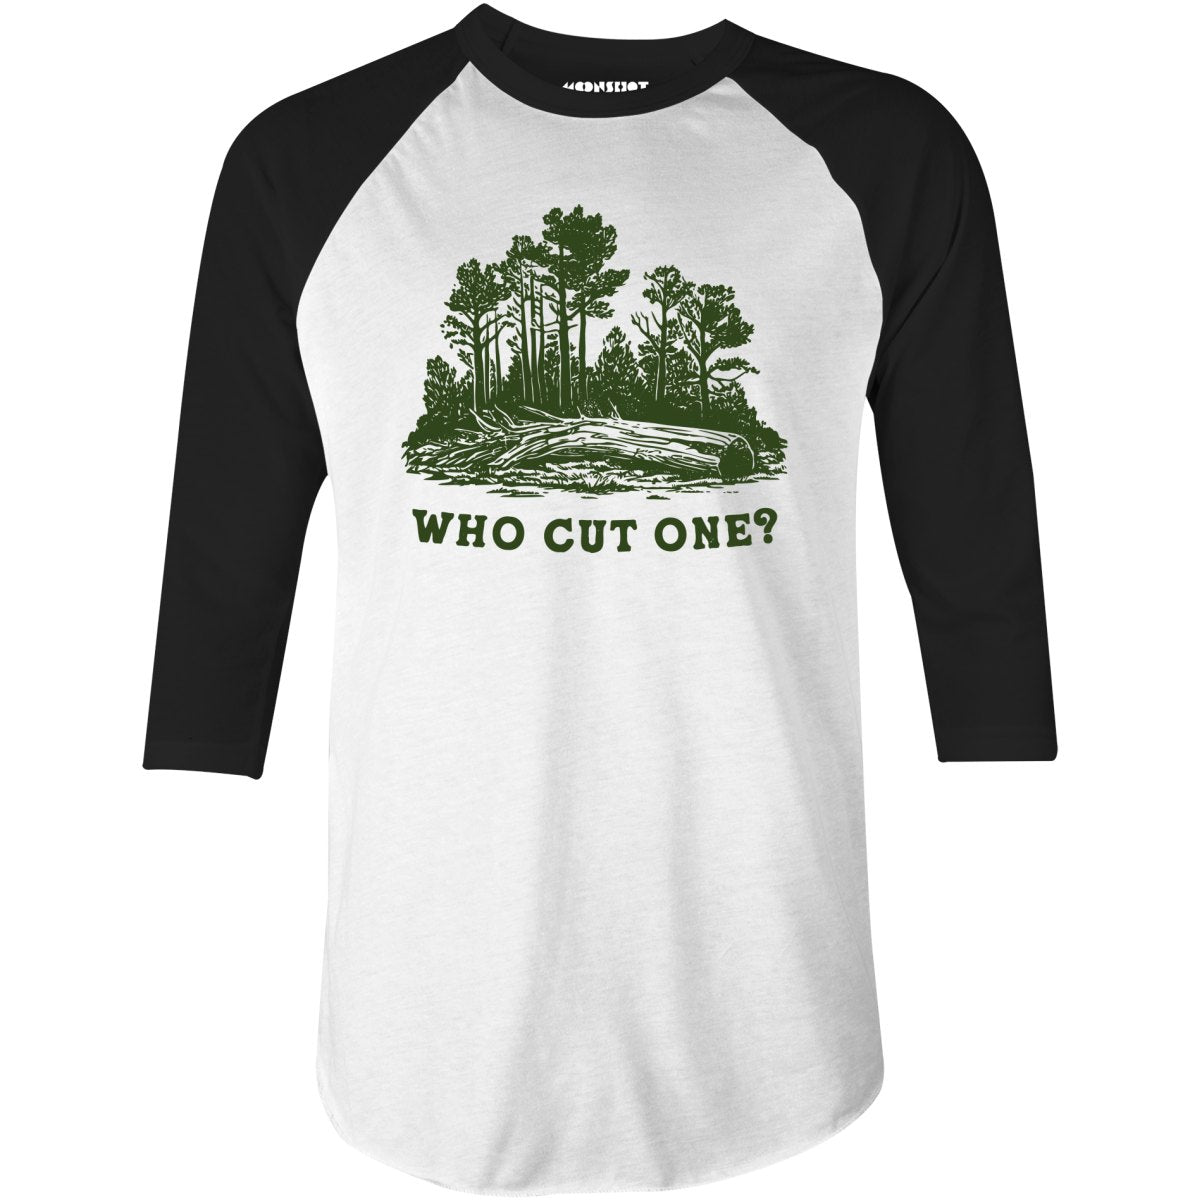 Who Cut One? - 3/4 Sleeve Raglan T-Shirt